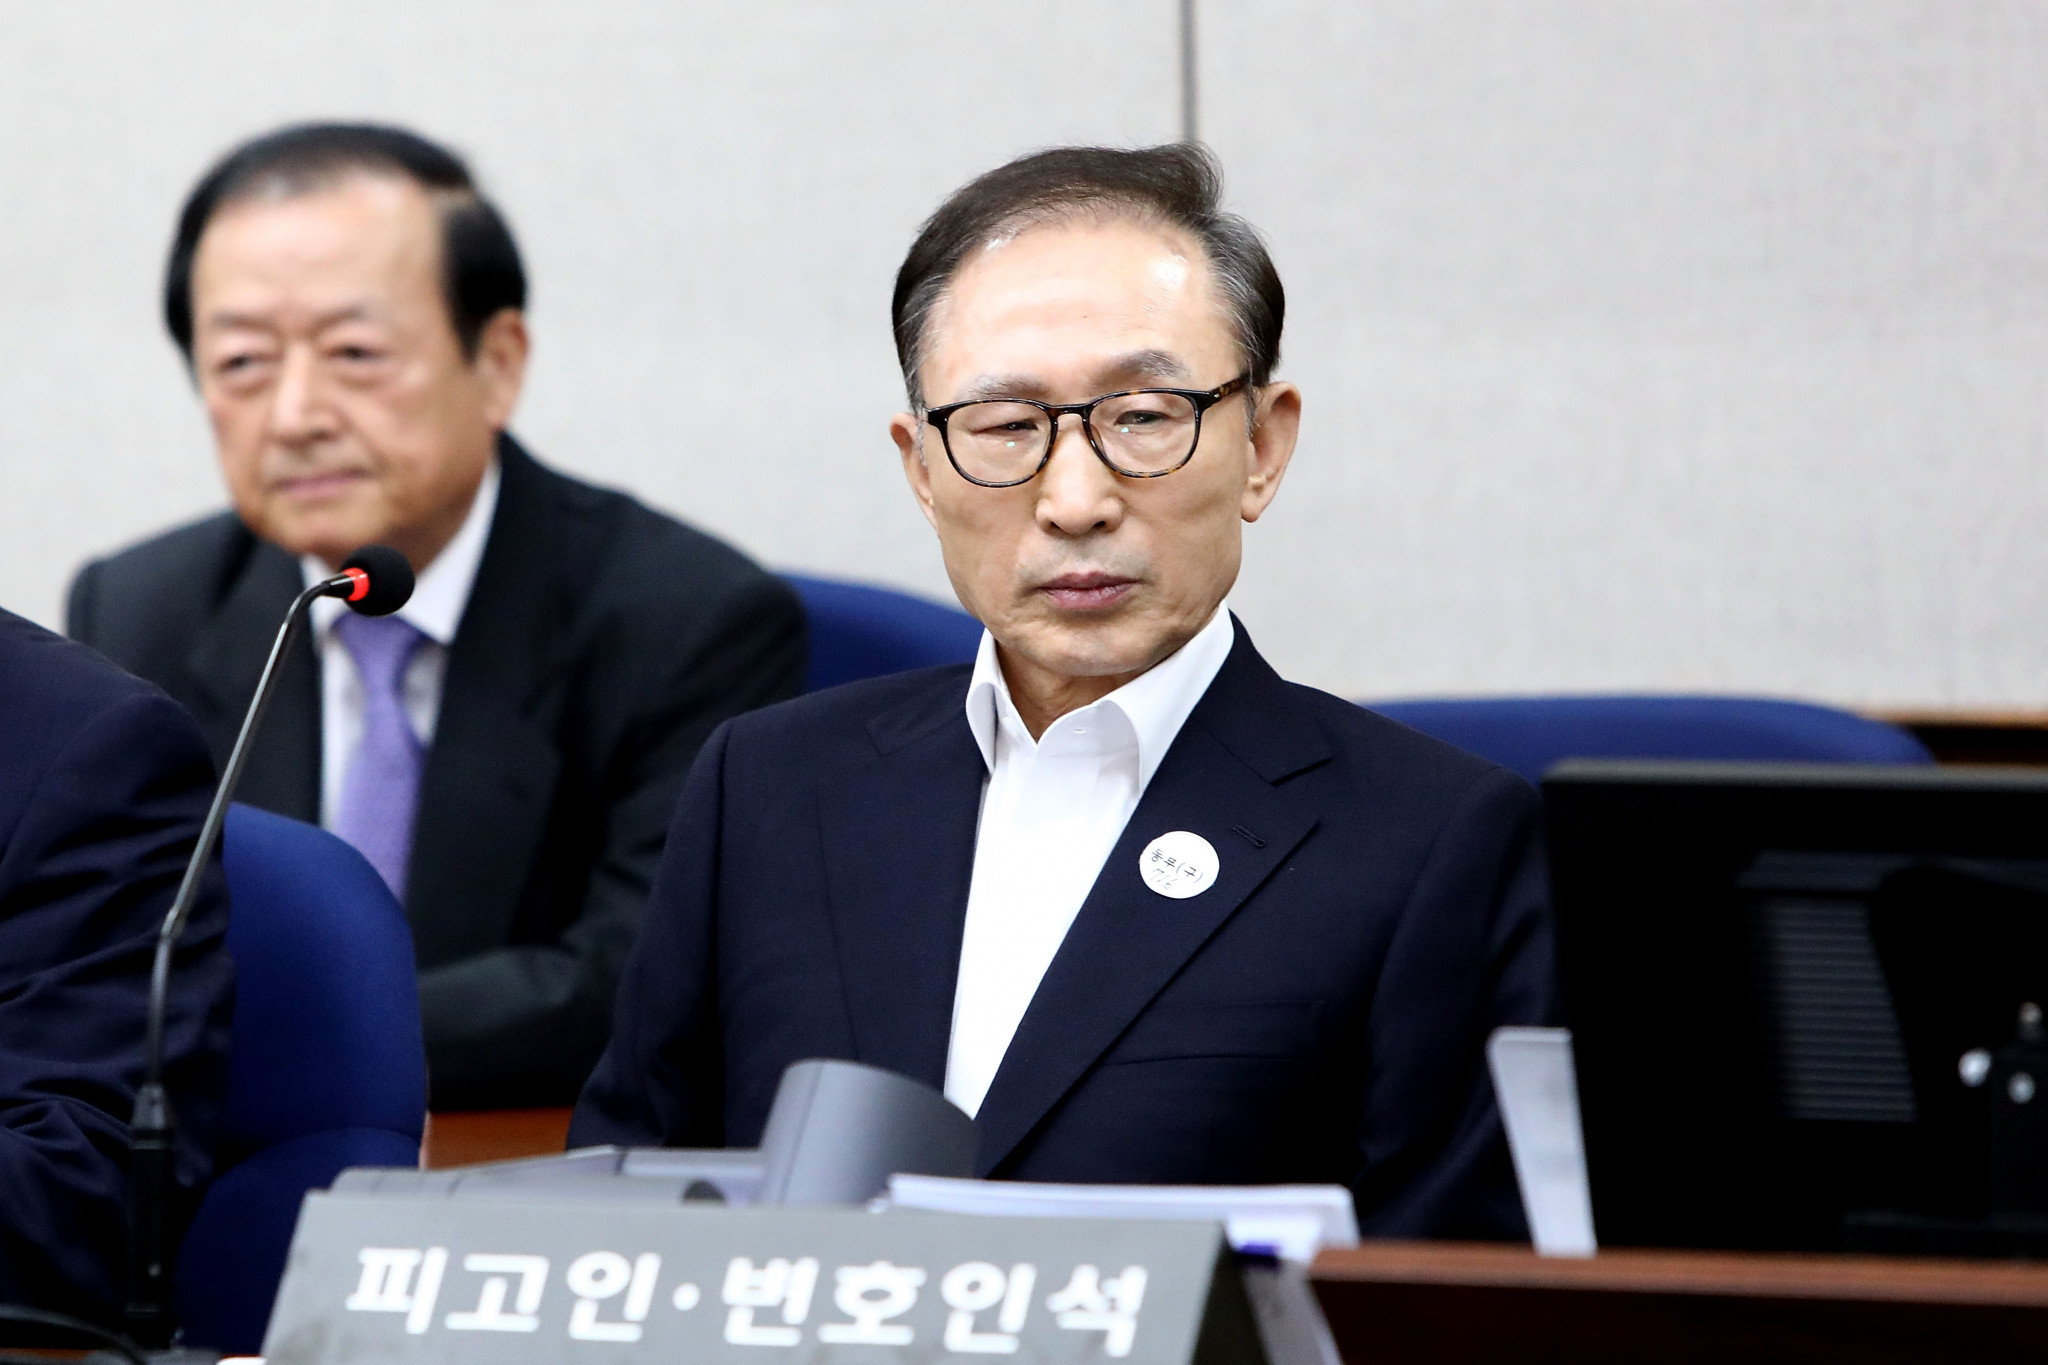 Former South Korean President linked to Pyeongchang 2018 corruption given pardon